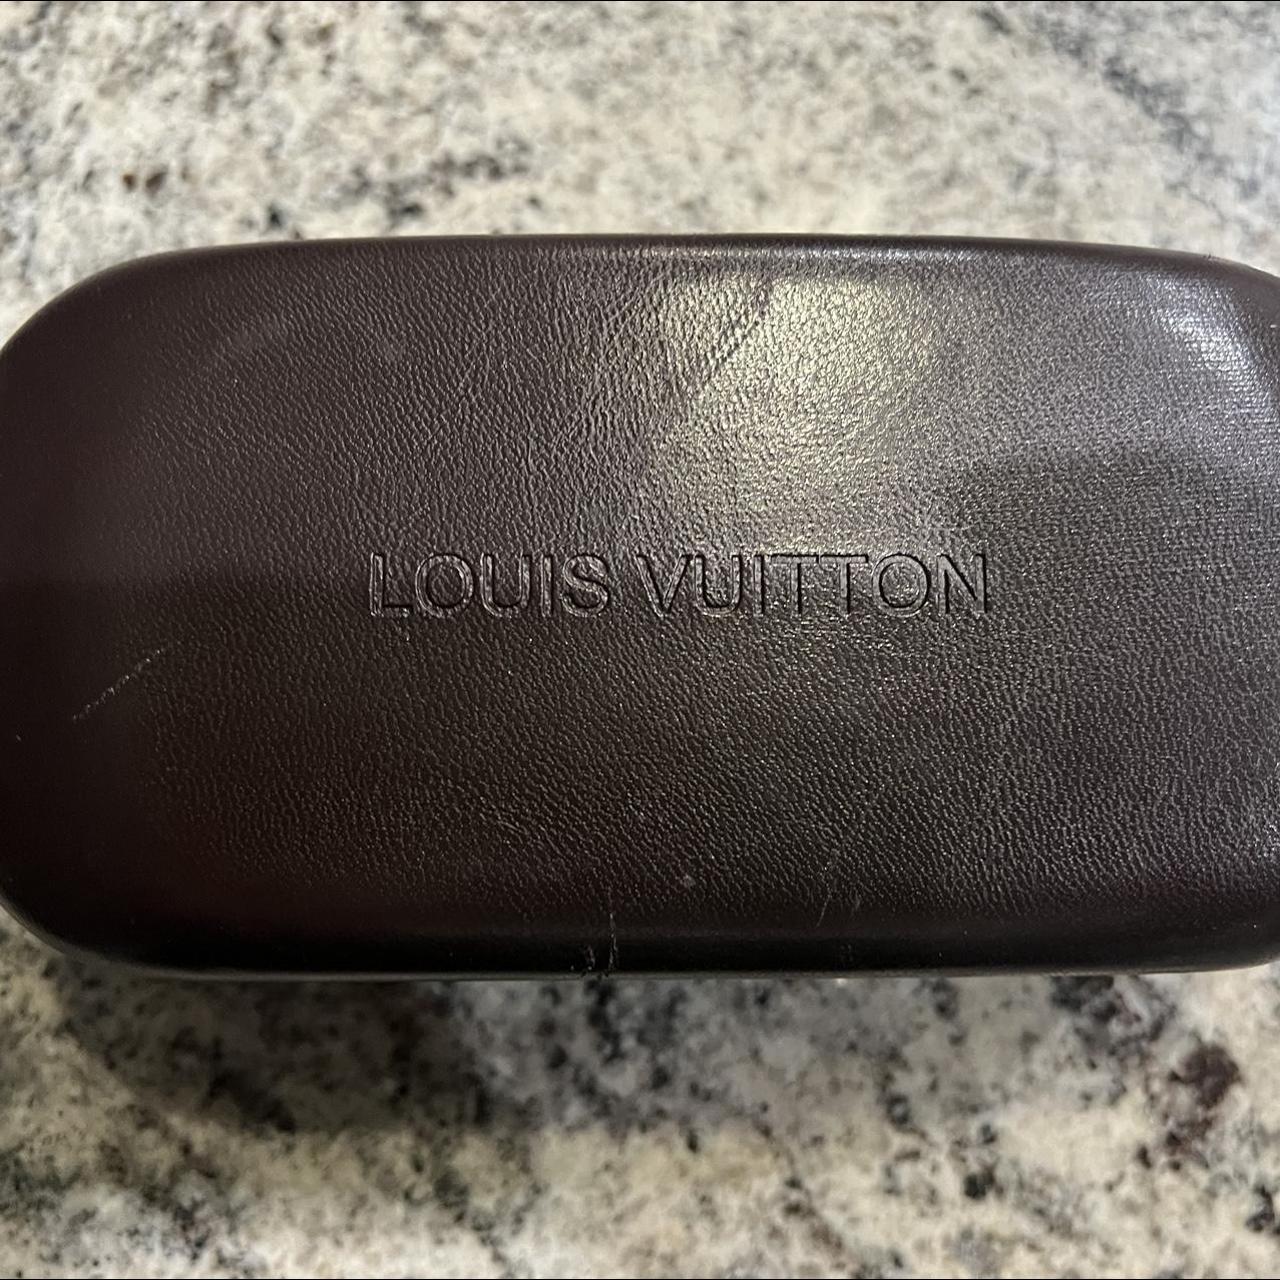 Louis Vuitton aviator gold party glasses - Depop